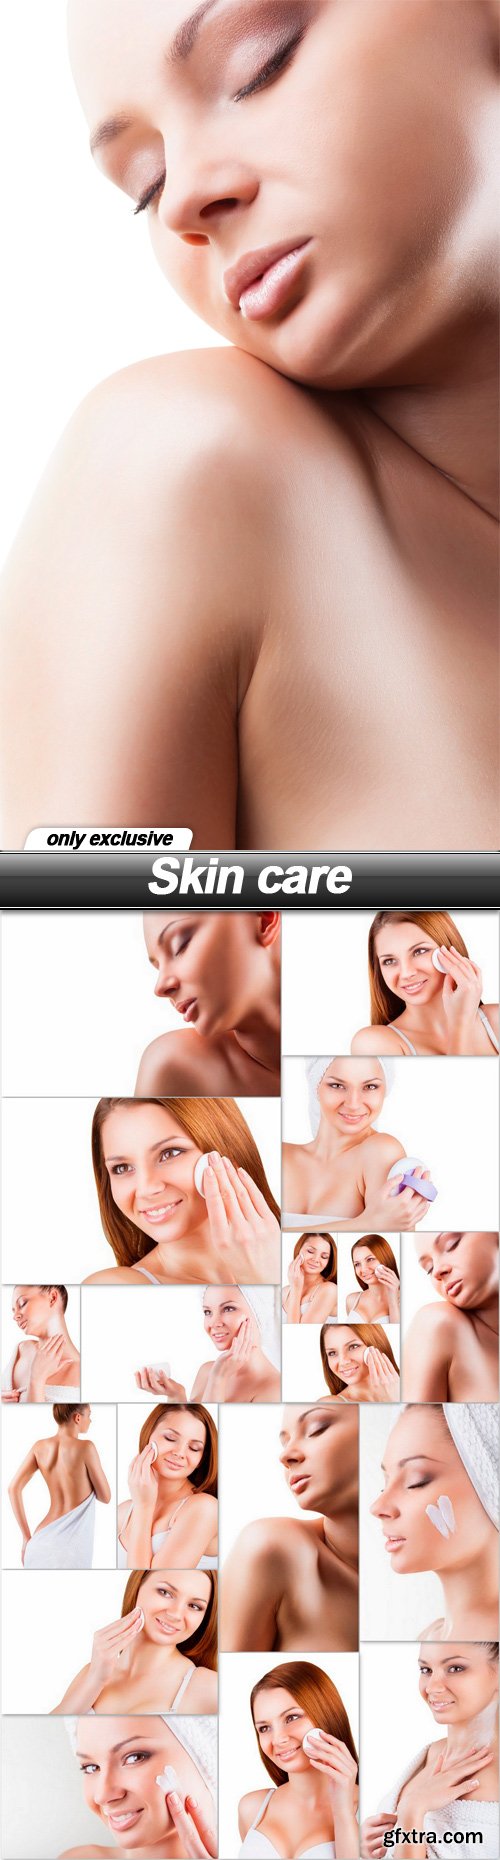 Skin care - 16 UHQ JPEG